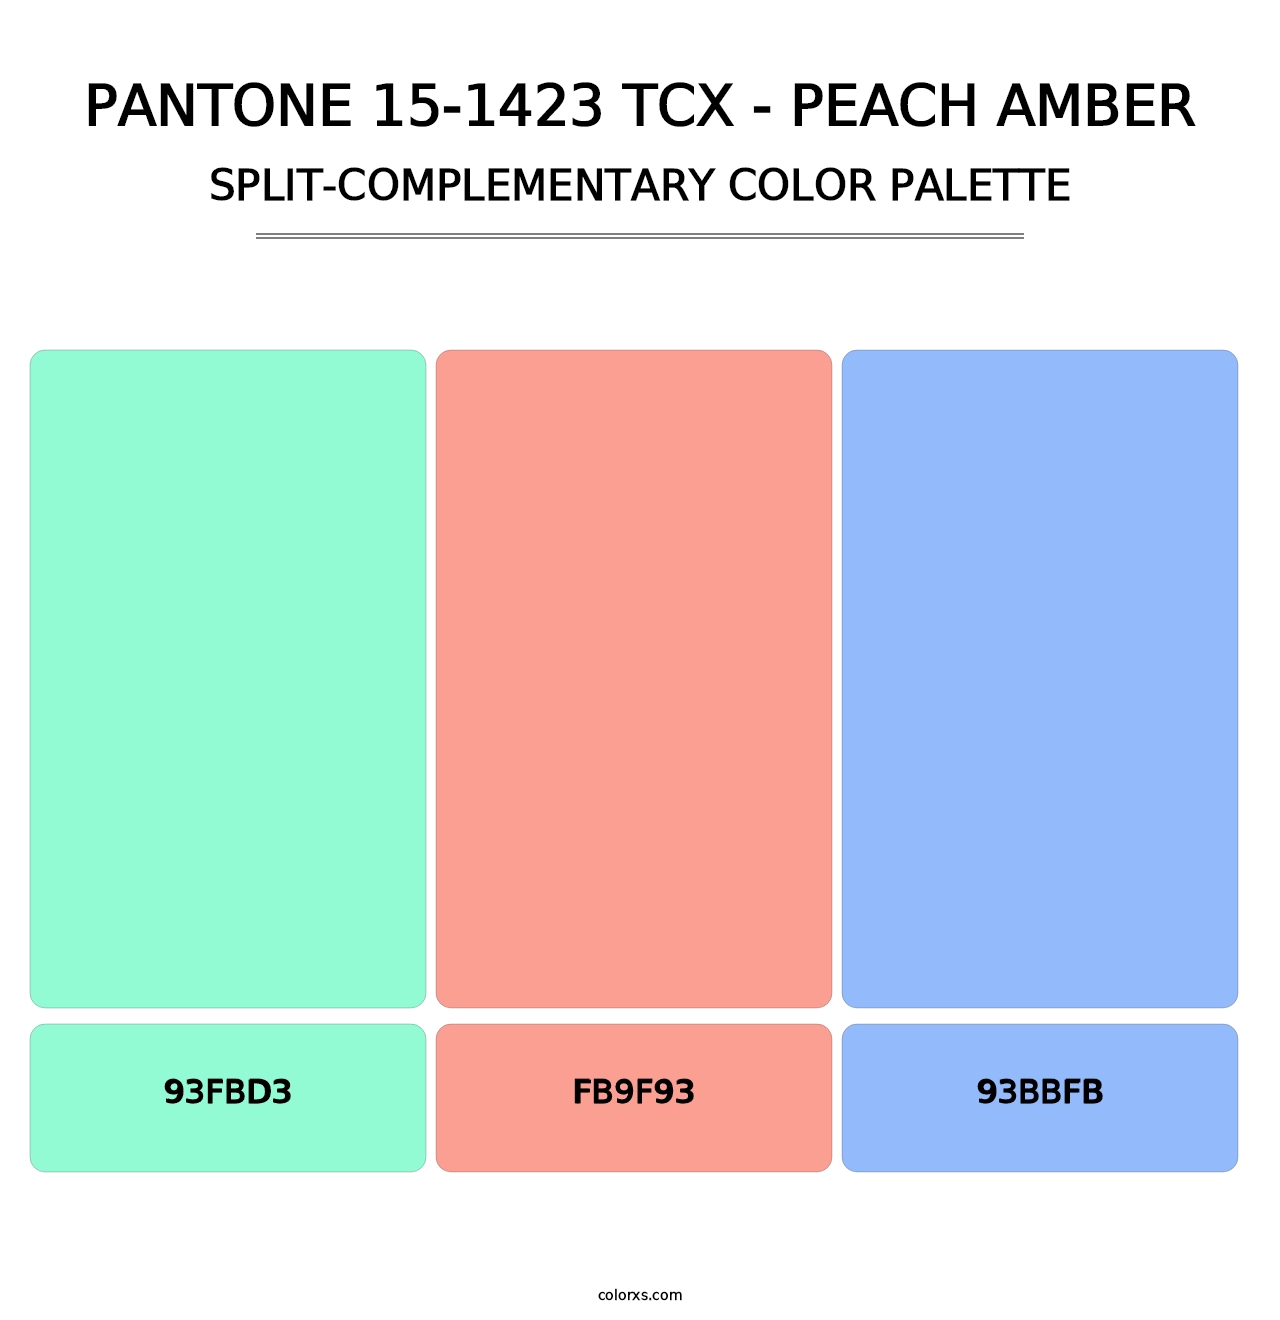 PANTONE 15-1423 TCX - Peach Amber - Split-Complementary Color Palette